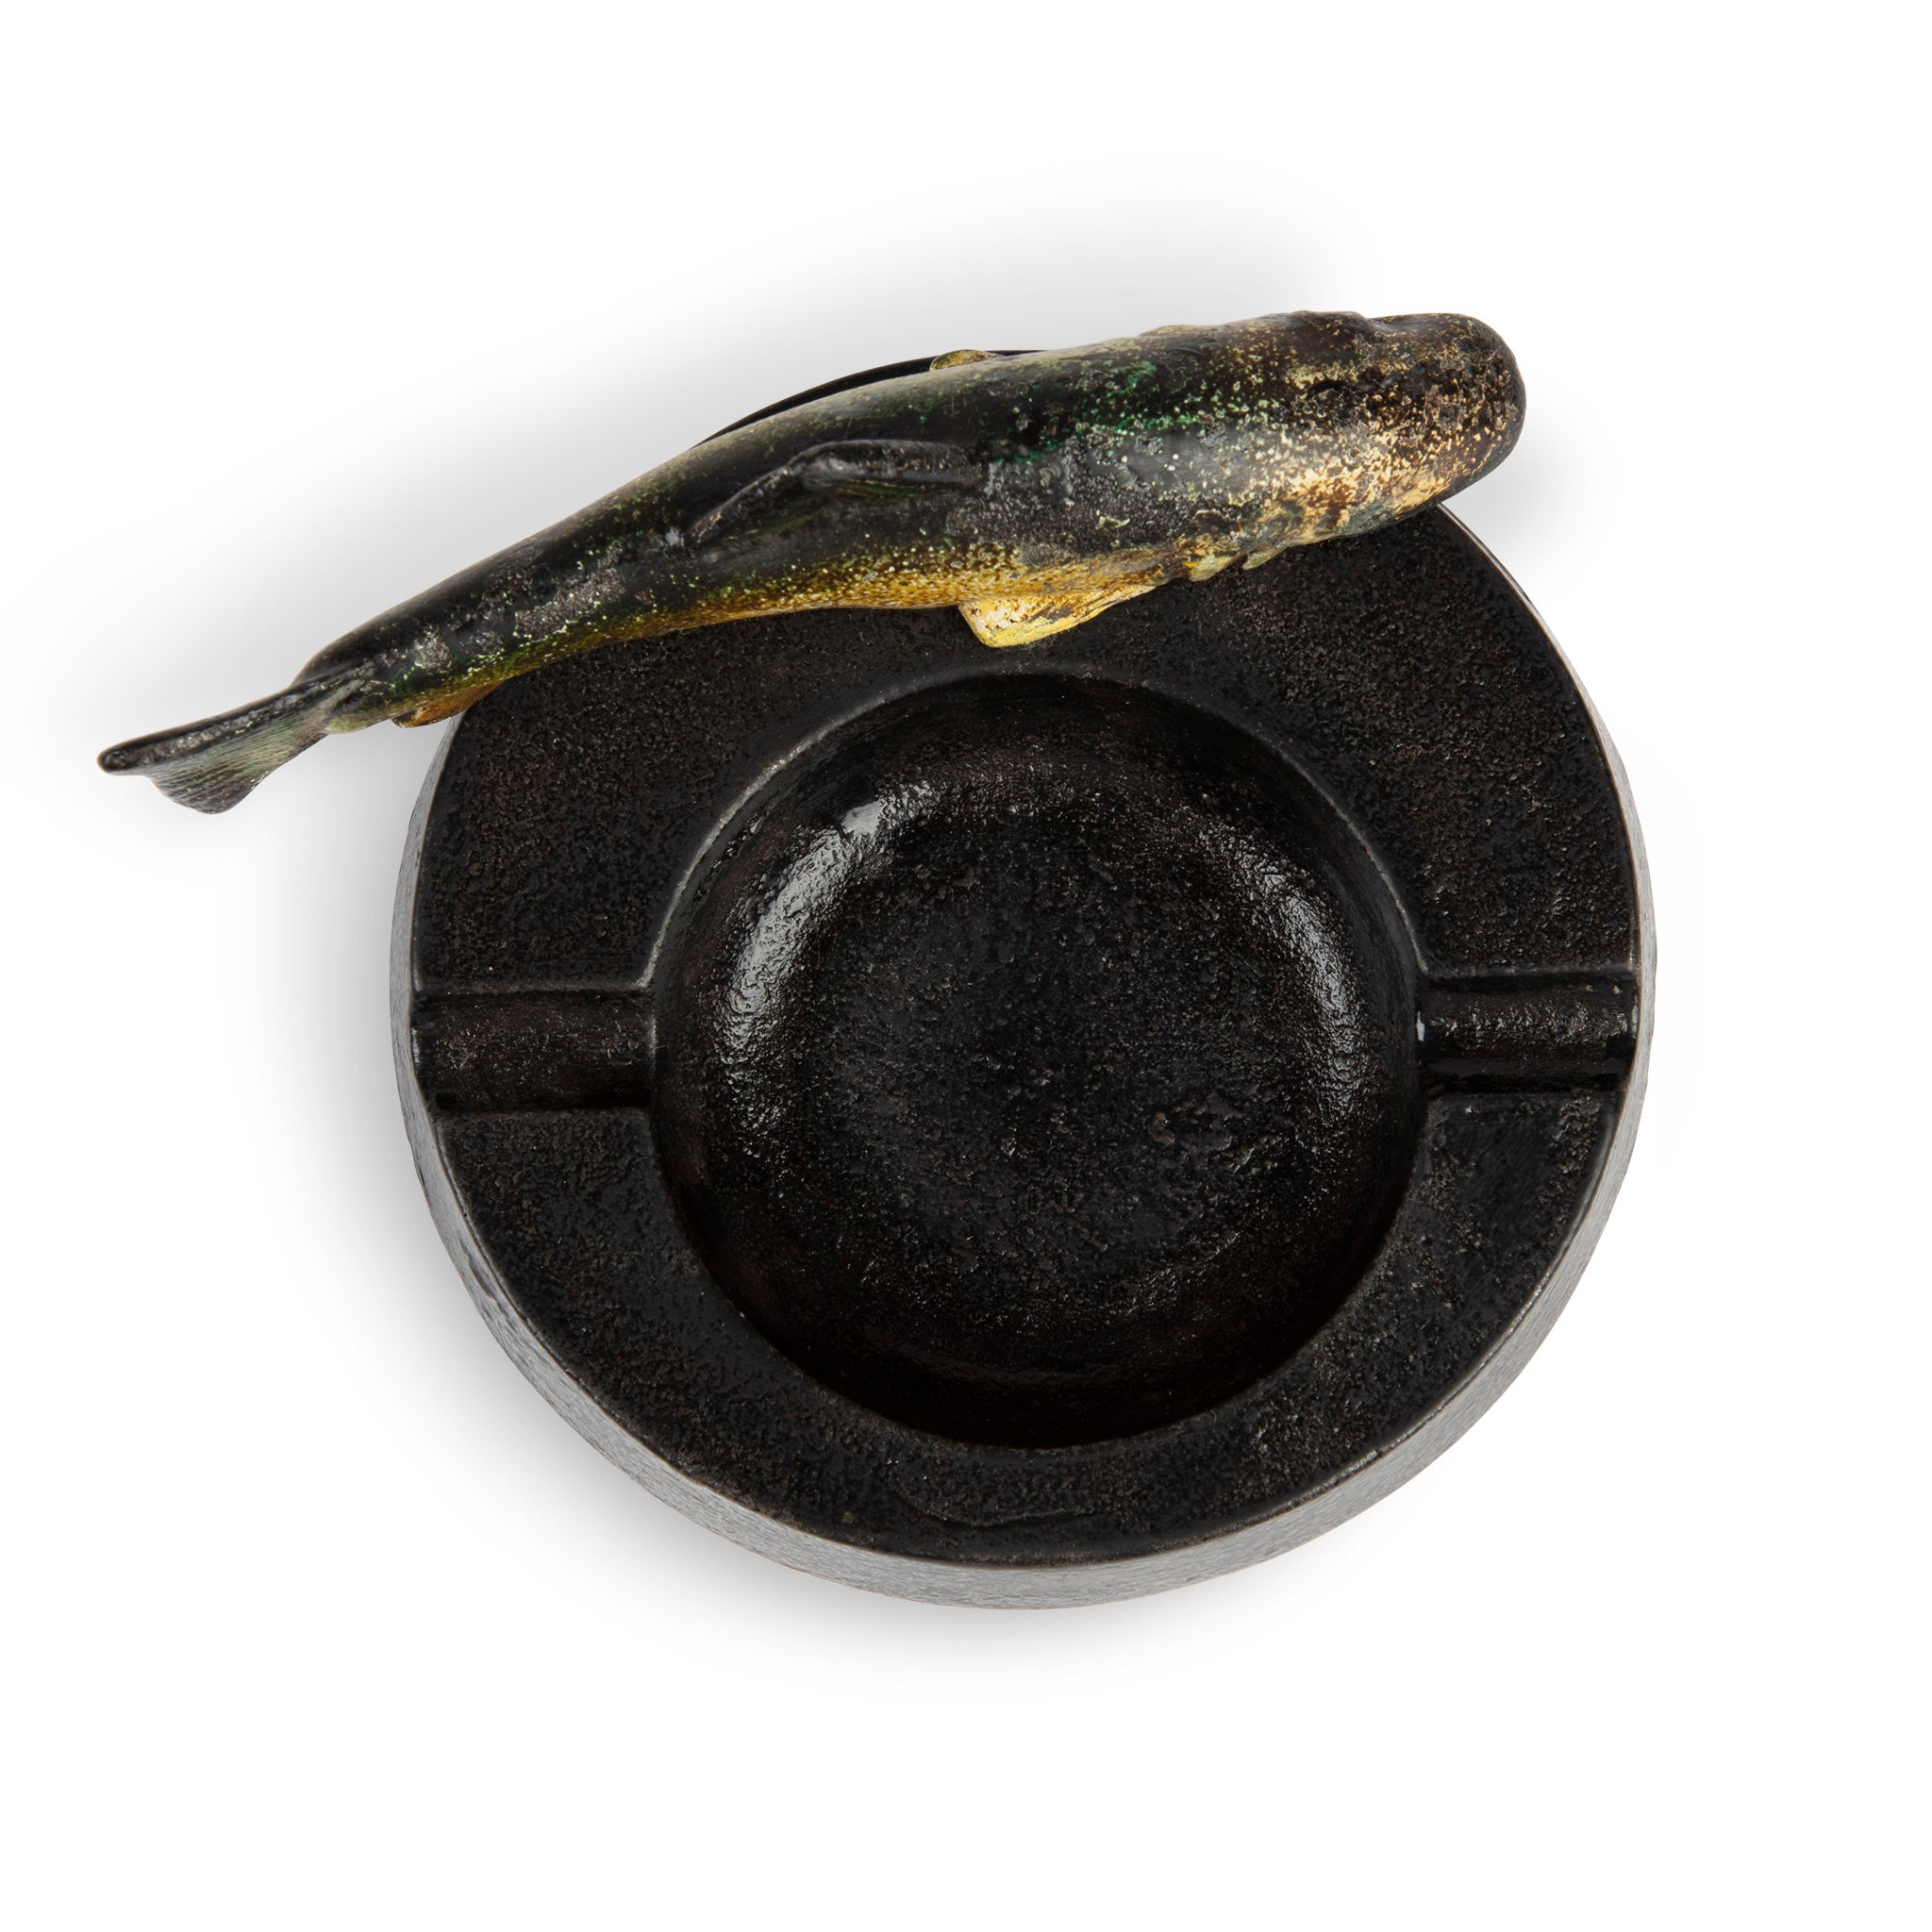 Vintage Cast Iron Fish Ashtray